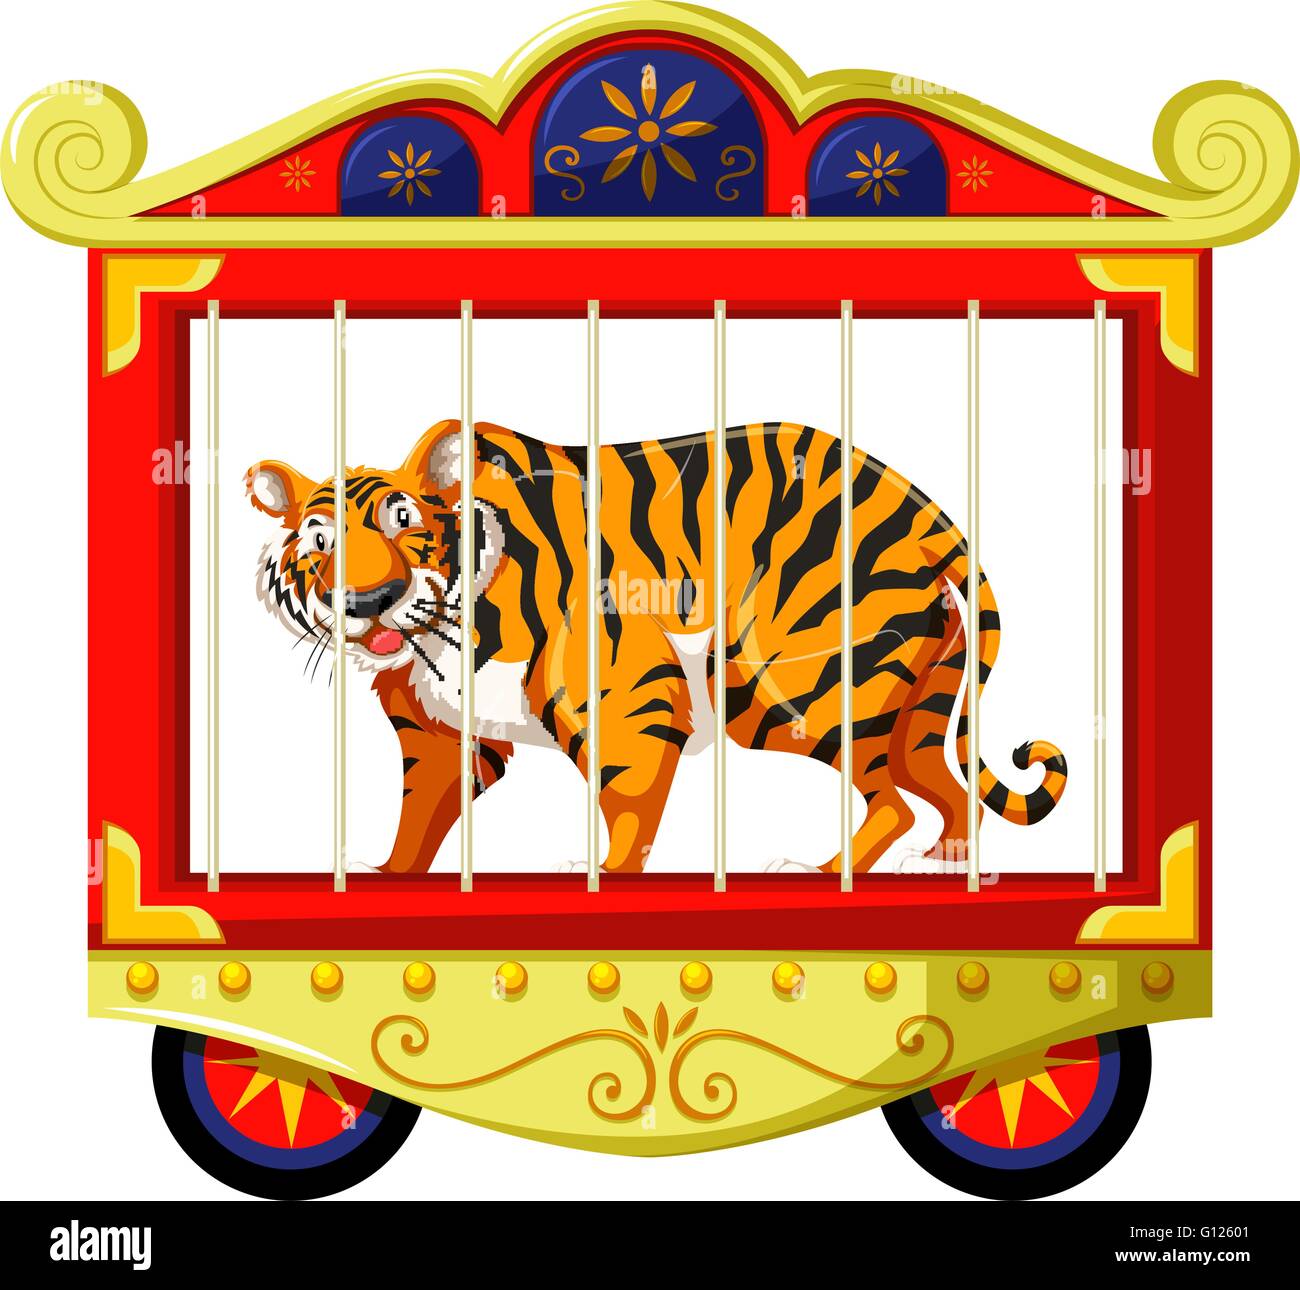 Wild Tiger dans la cage de cirque illustration Illustration de Vecteur